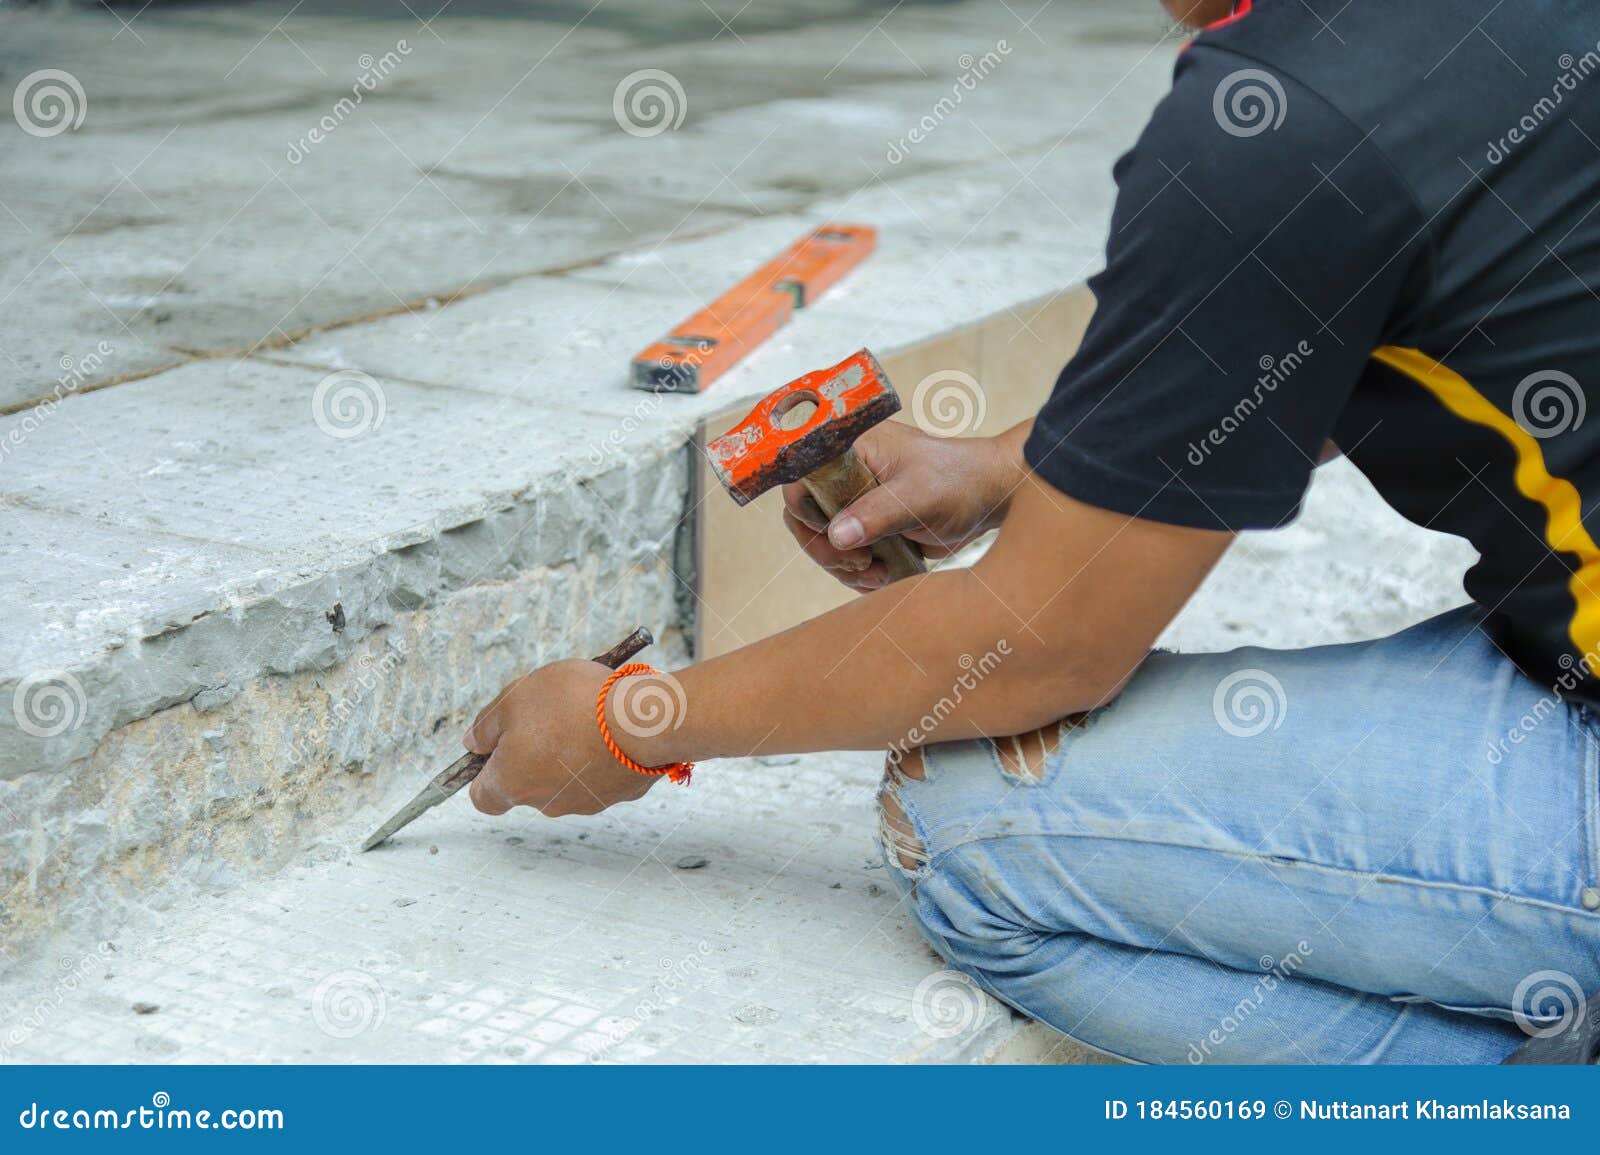 Can You Chisel a Concrete Slab? 